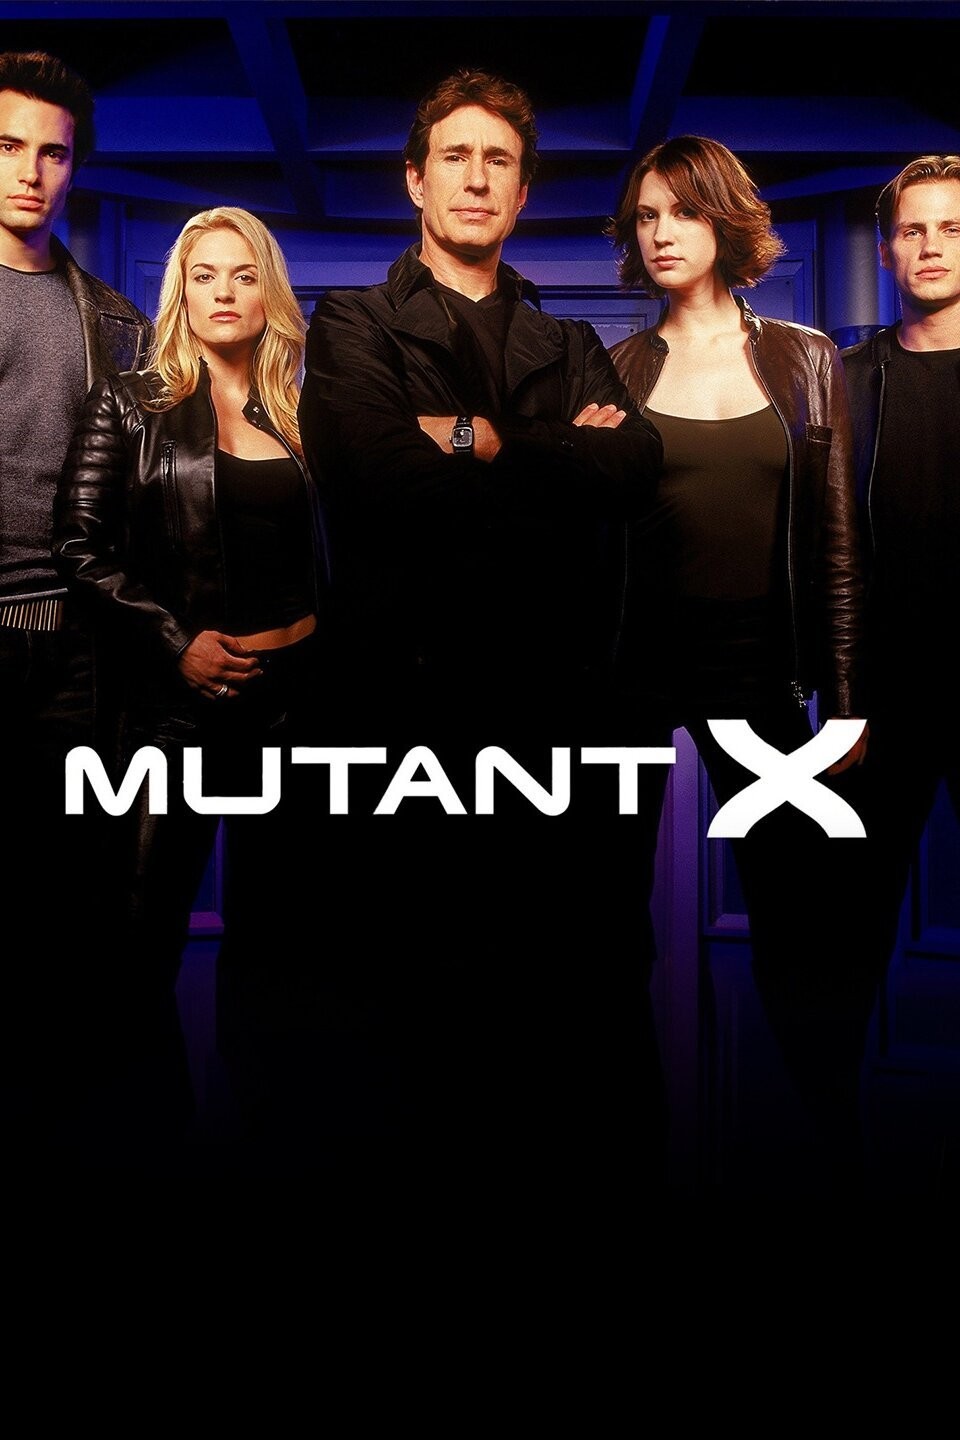 The New Mutants - Full Cast & Crew - TV Guide